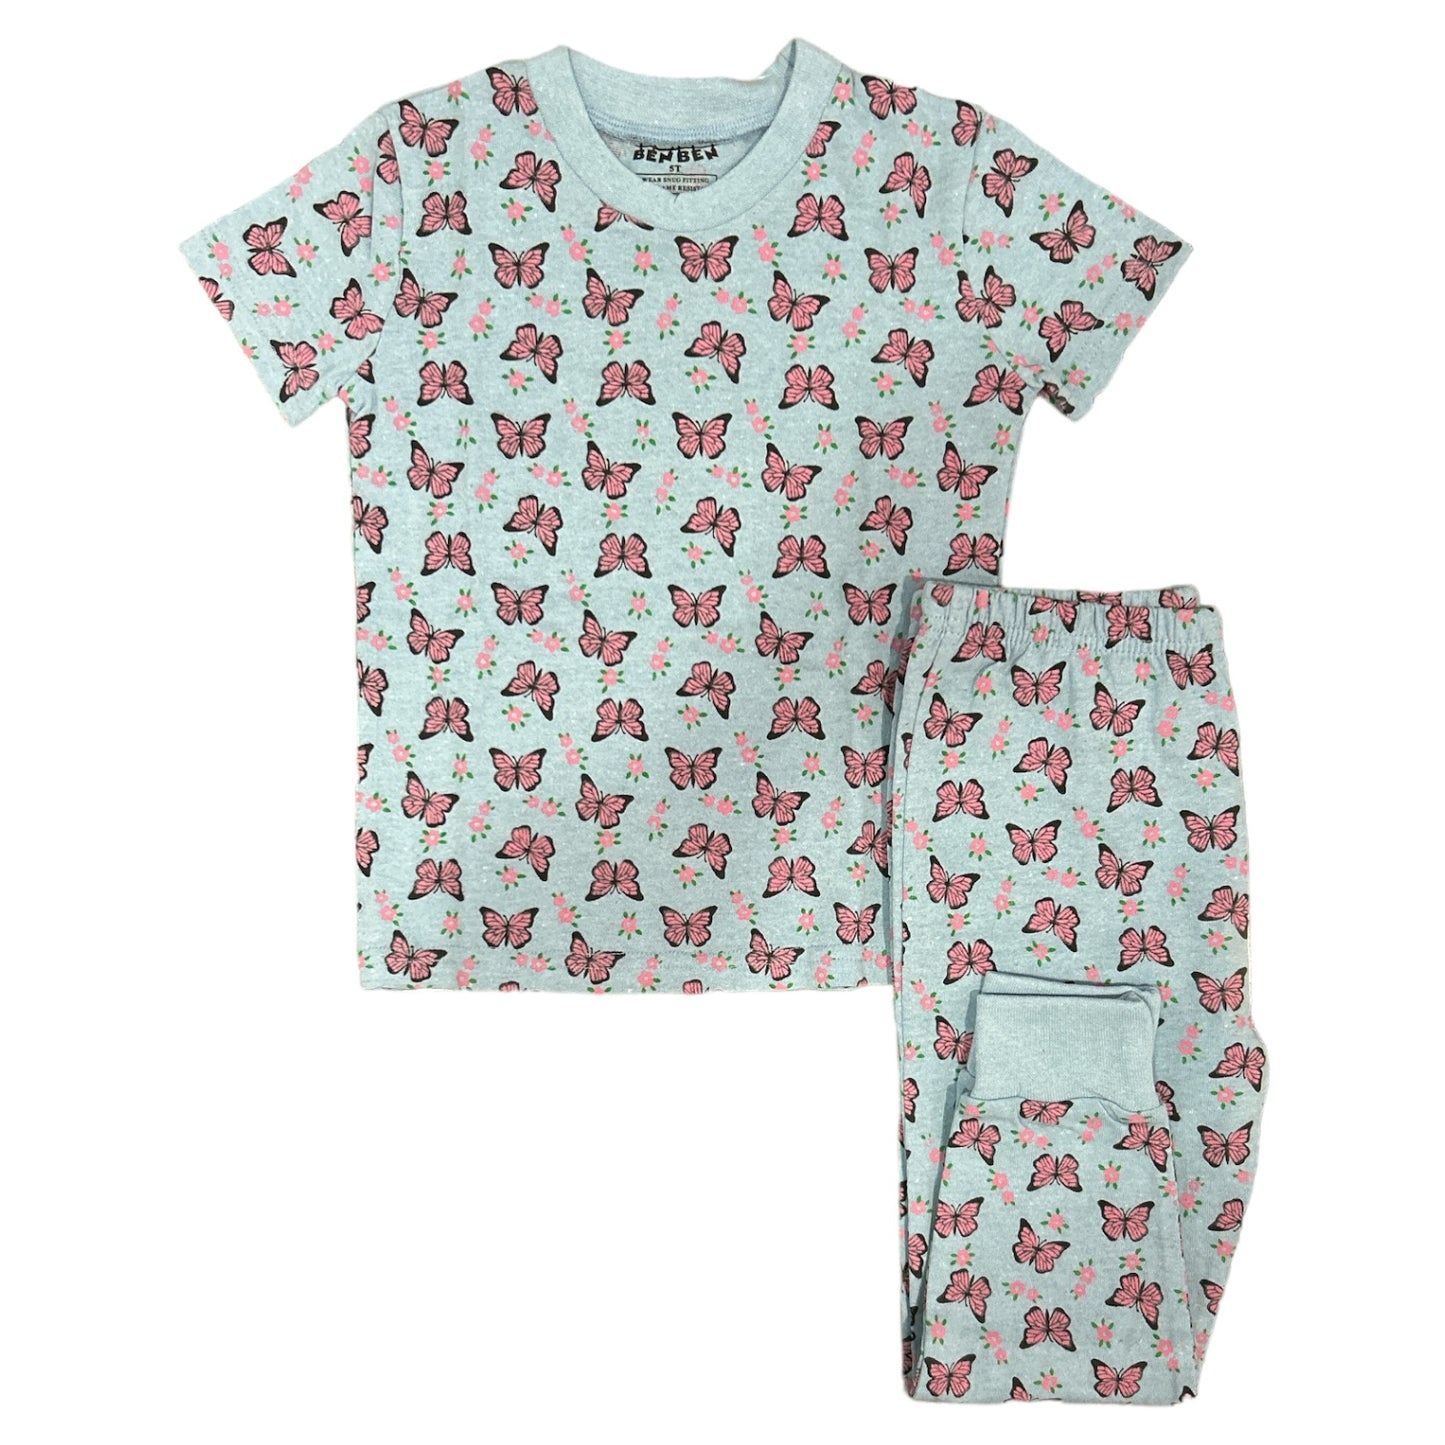 Butterflies Shorts Pajamas For Kids Super Soft - 2 Piece Set